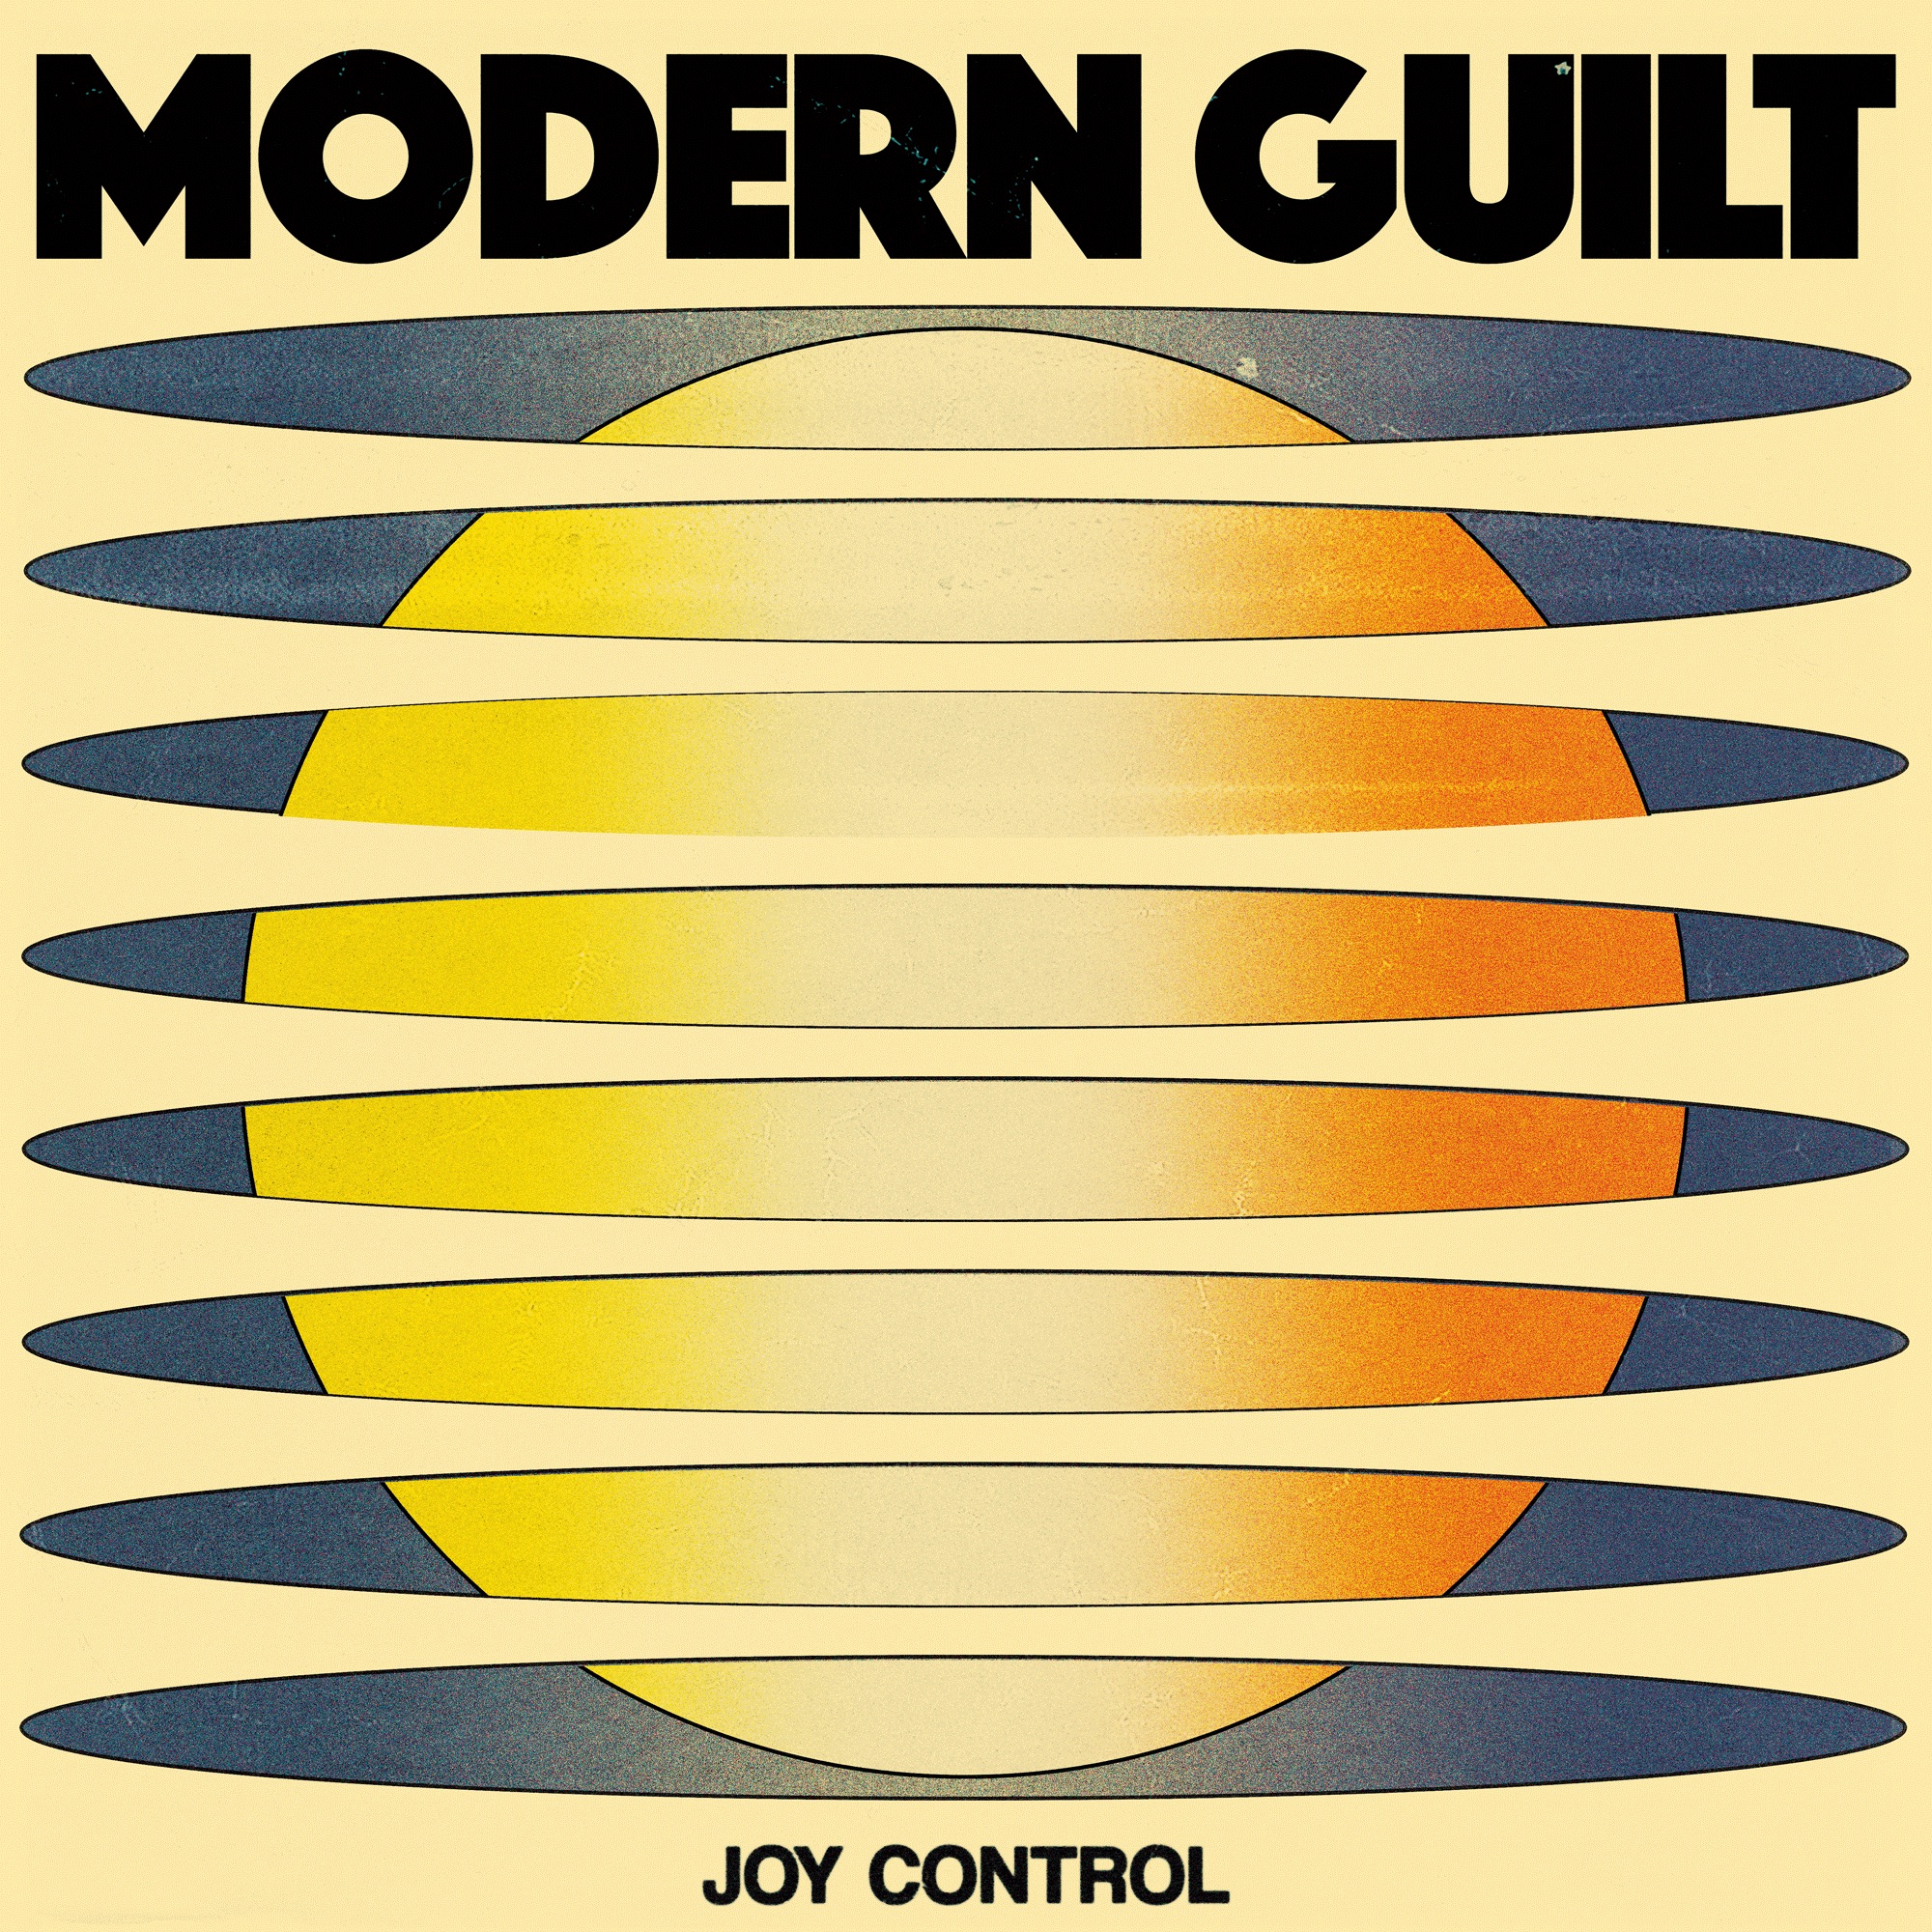 MG-JOY-CONTROL